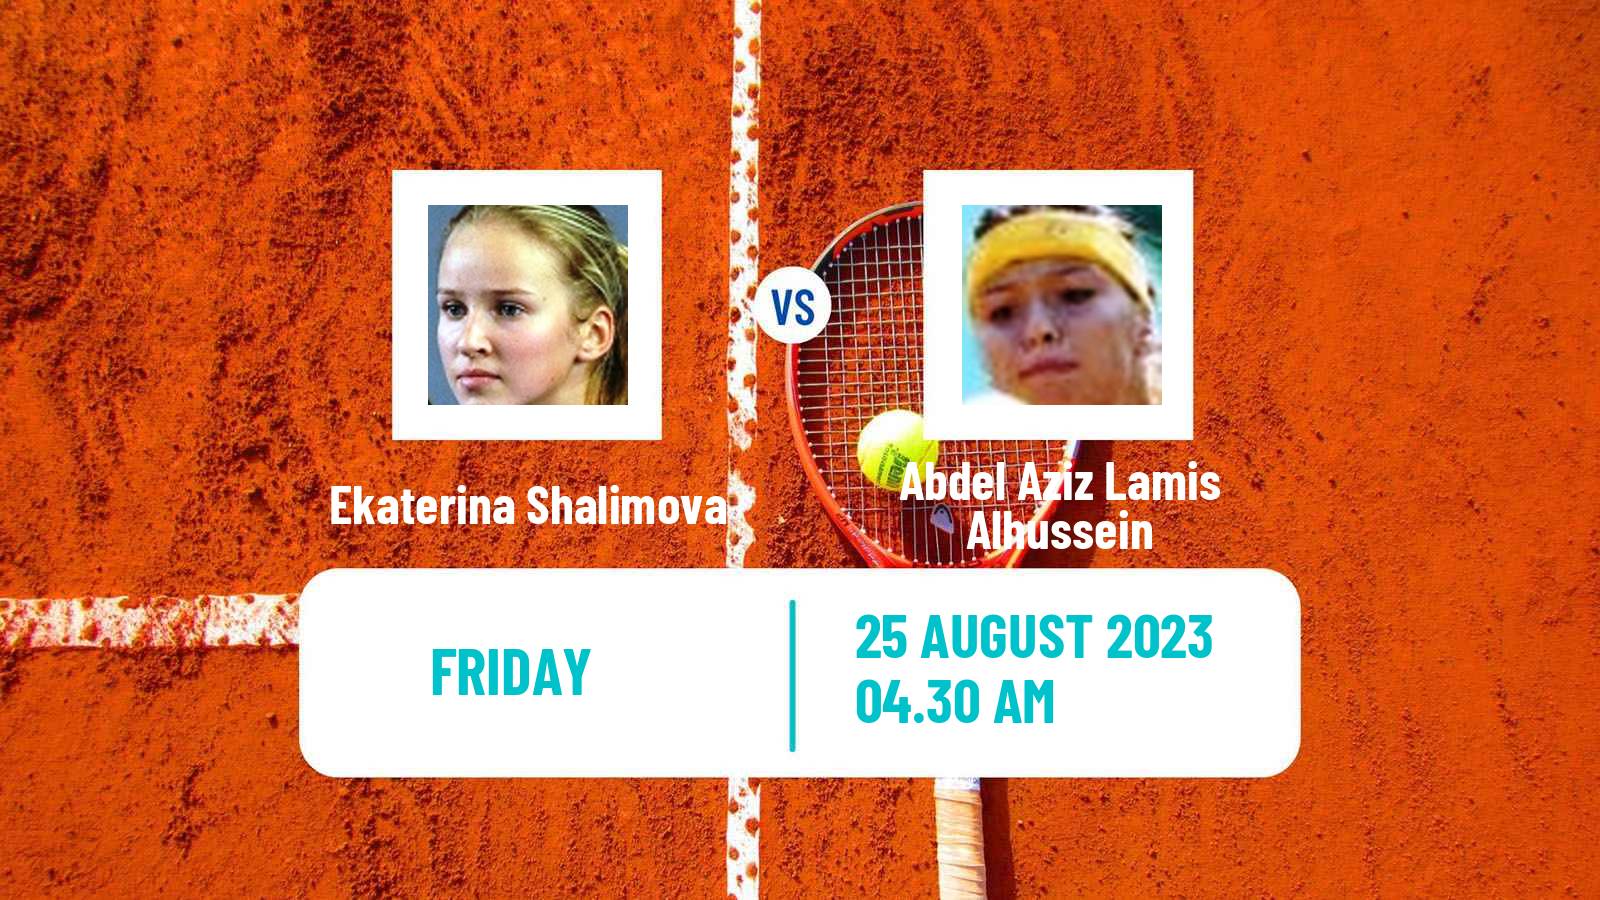 Tennis ITF W15 Monastir 29 Women Ekaterina Shalimova - Abdel Aziz Lamis Alhussein